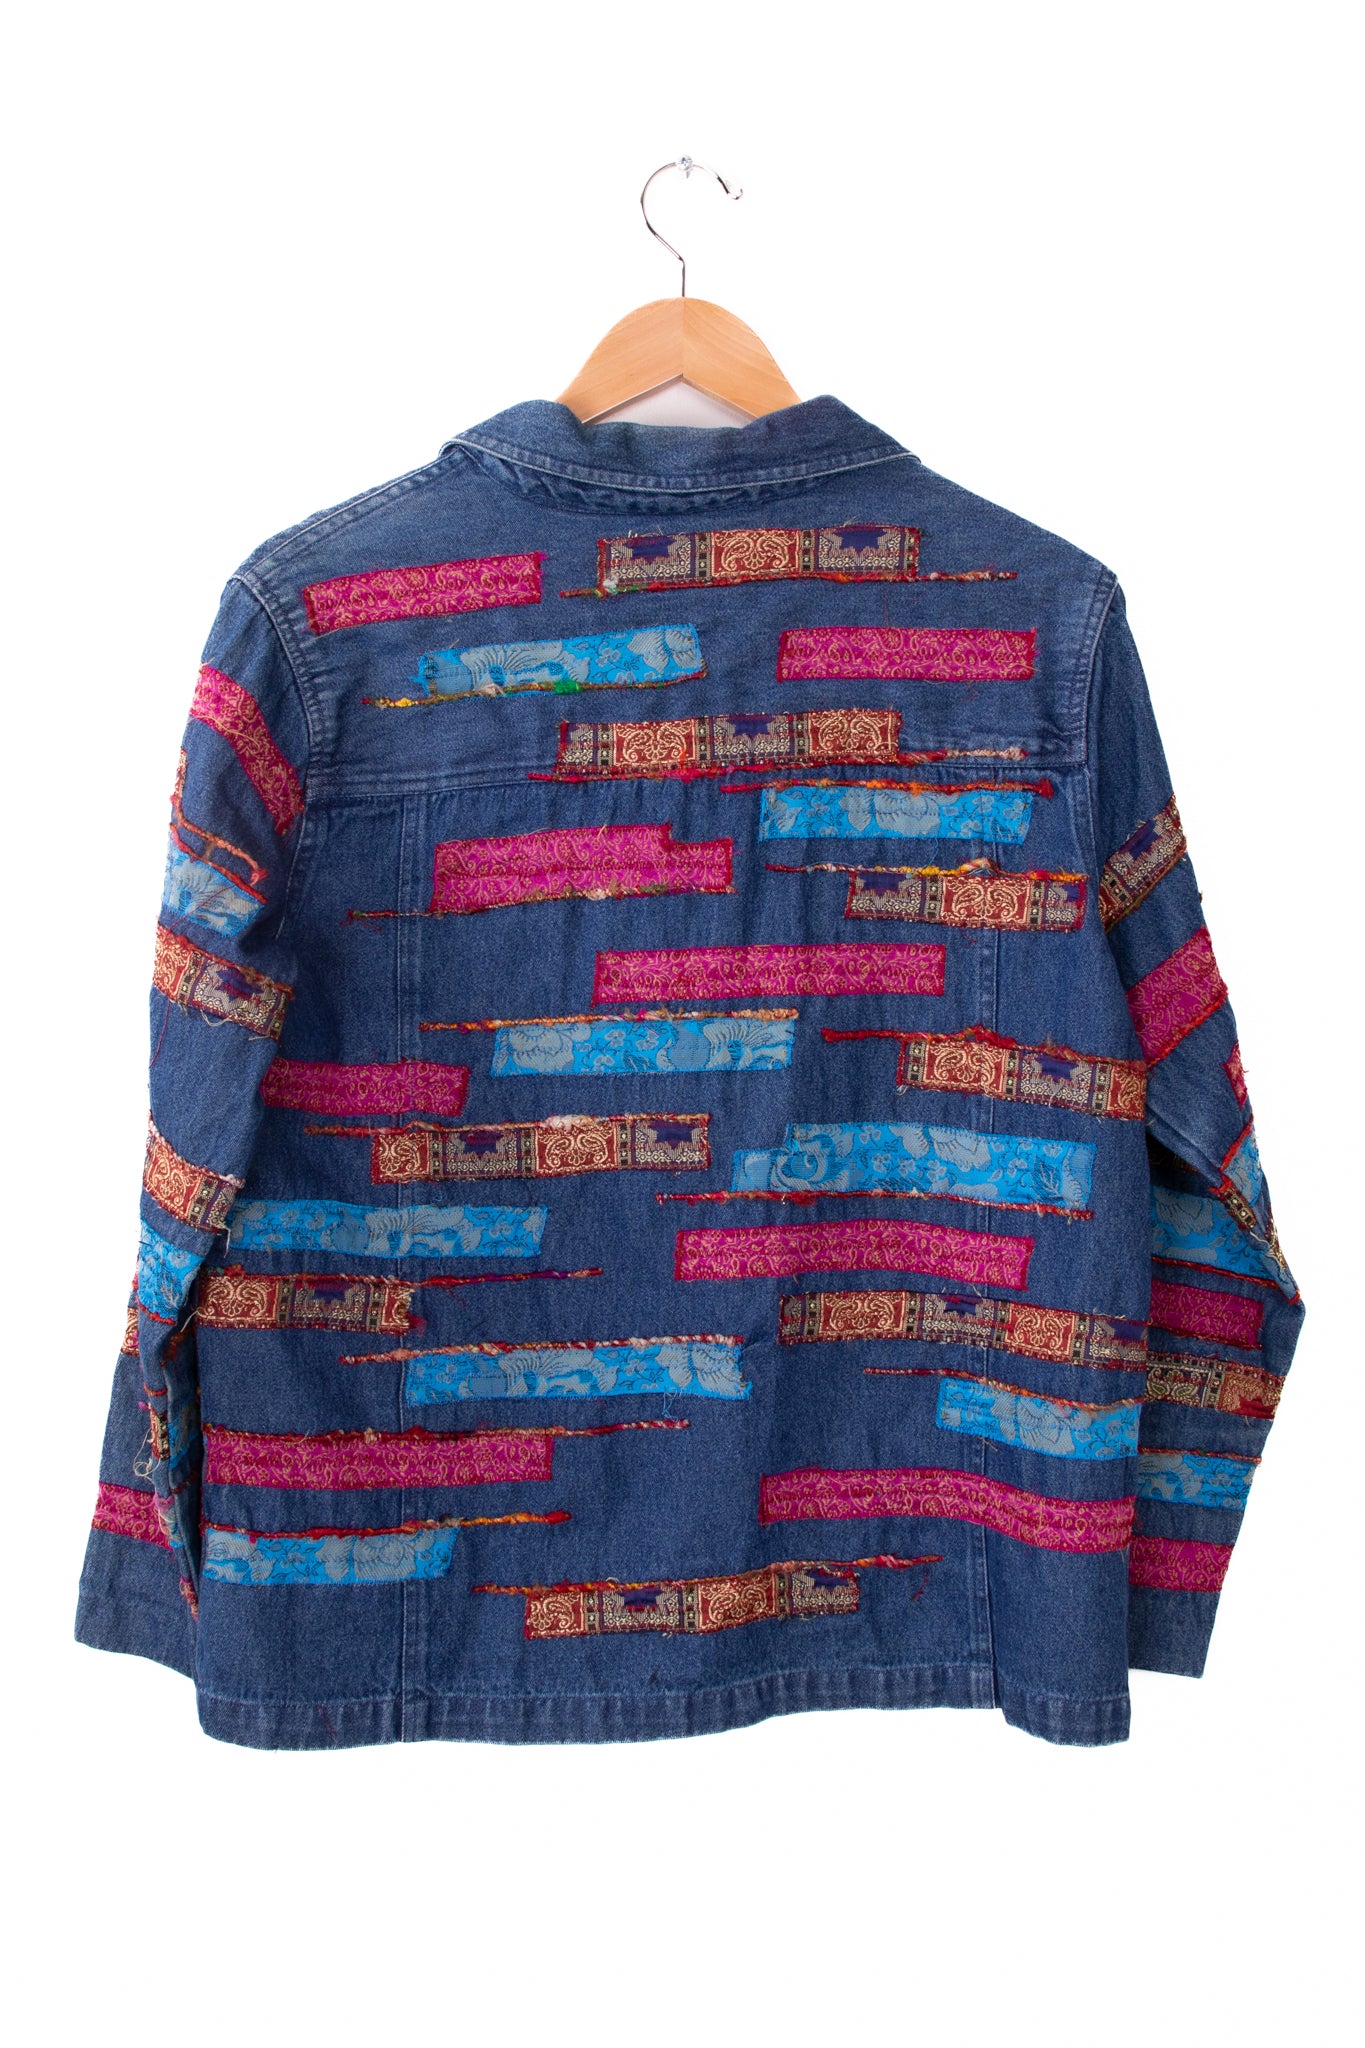 Breckenridge Rectangle Fabric Patches Denim Jacket